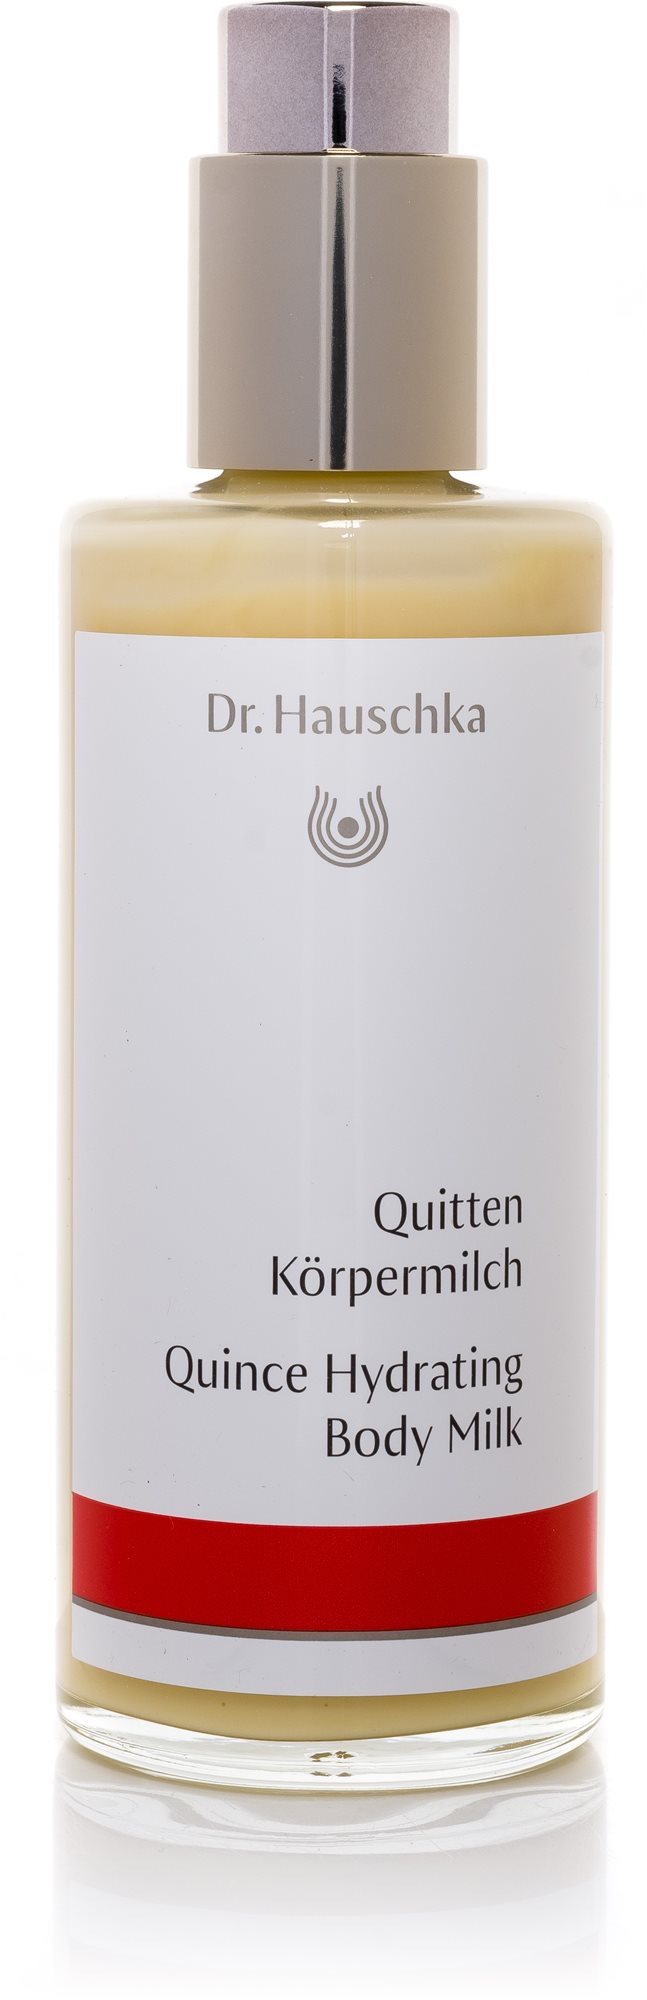 DR. HAUSCHKA Quince Hydrating Body Milk 145 ml